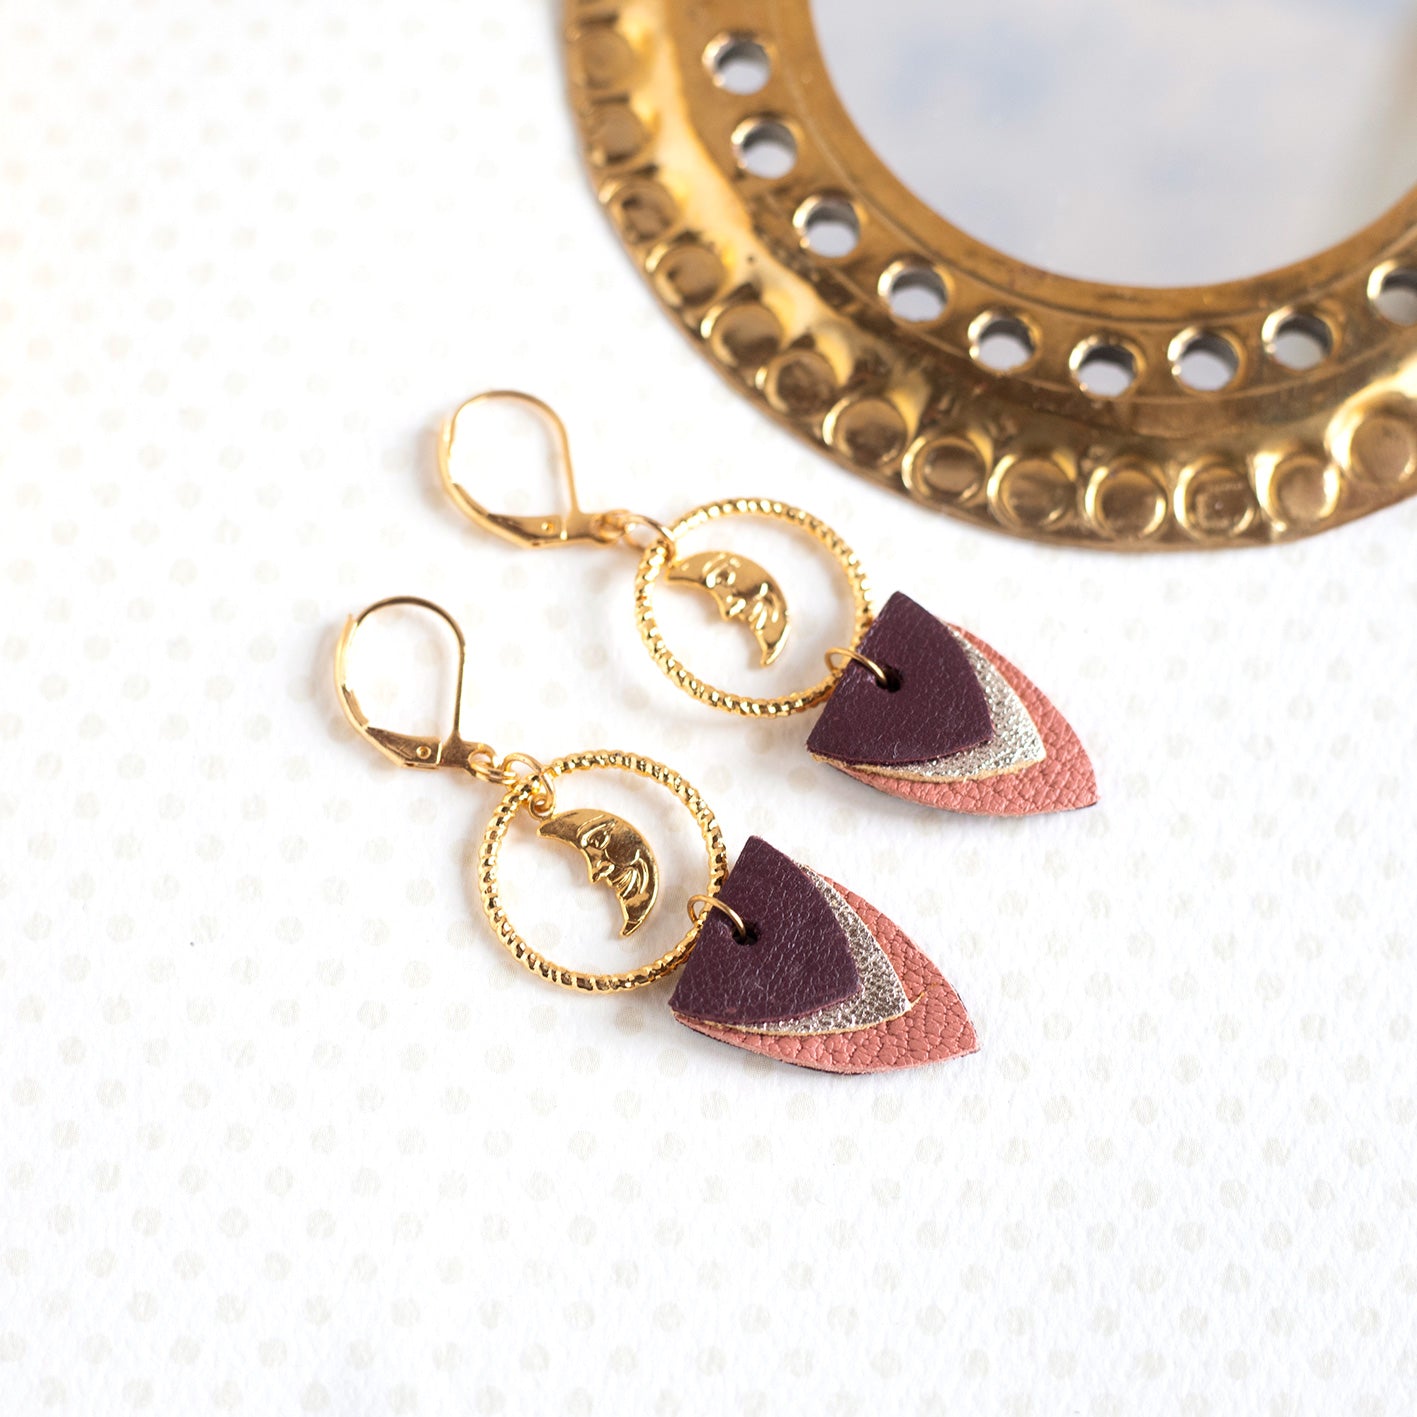 Ava salmon earrings